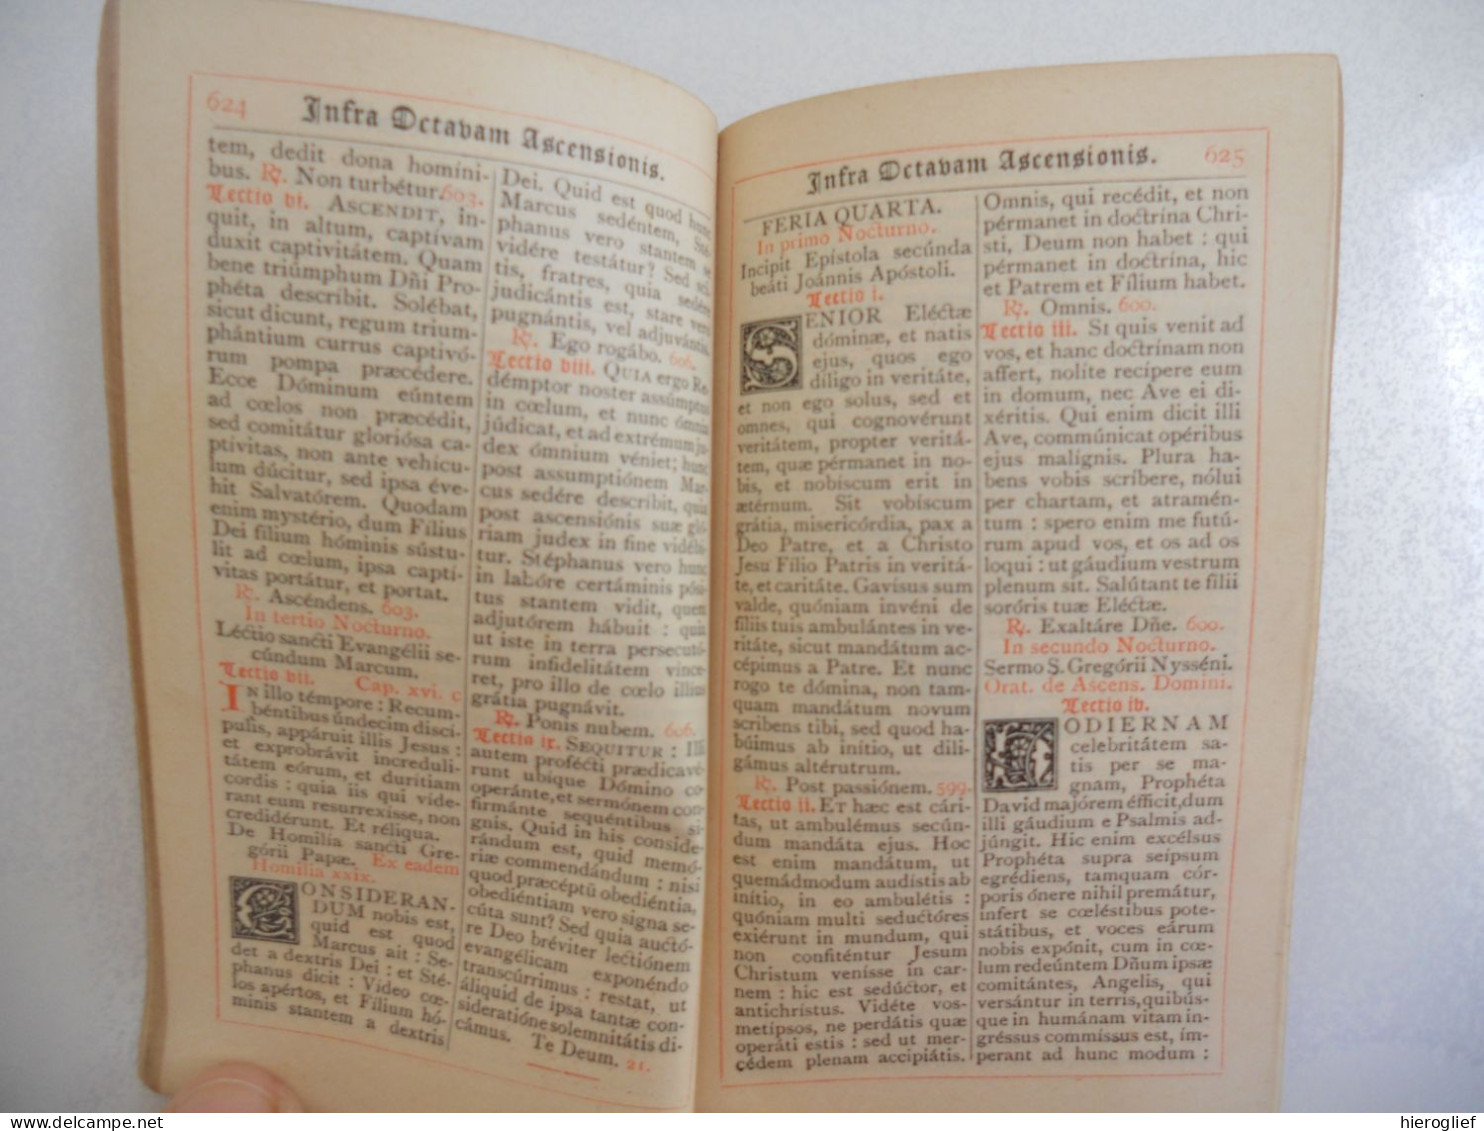 Breviarium Romanum - Proprium De Tempore Ab Ascensione Domini Usque Ad Dominicam Trinitatis / Tournai - Libros Antiguos Y De Colección